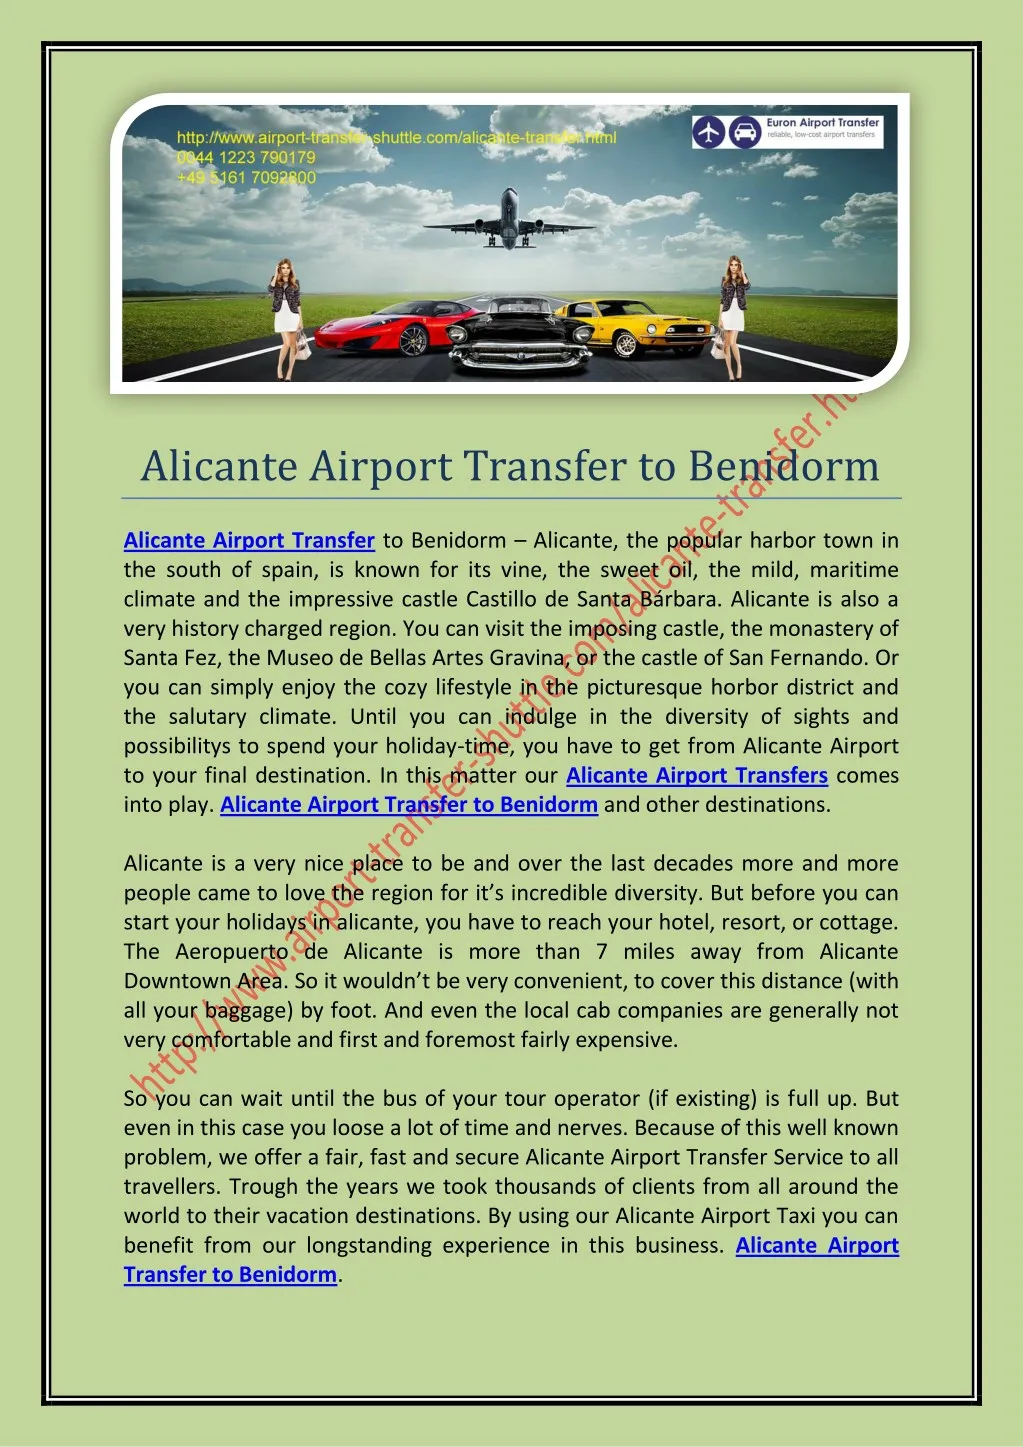 alicante airport transfer to benidorm